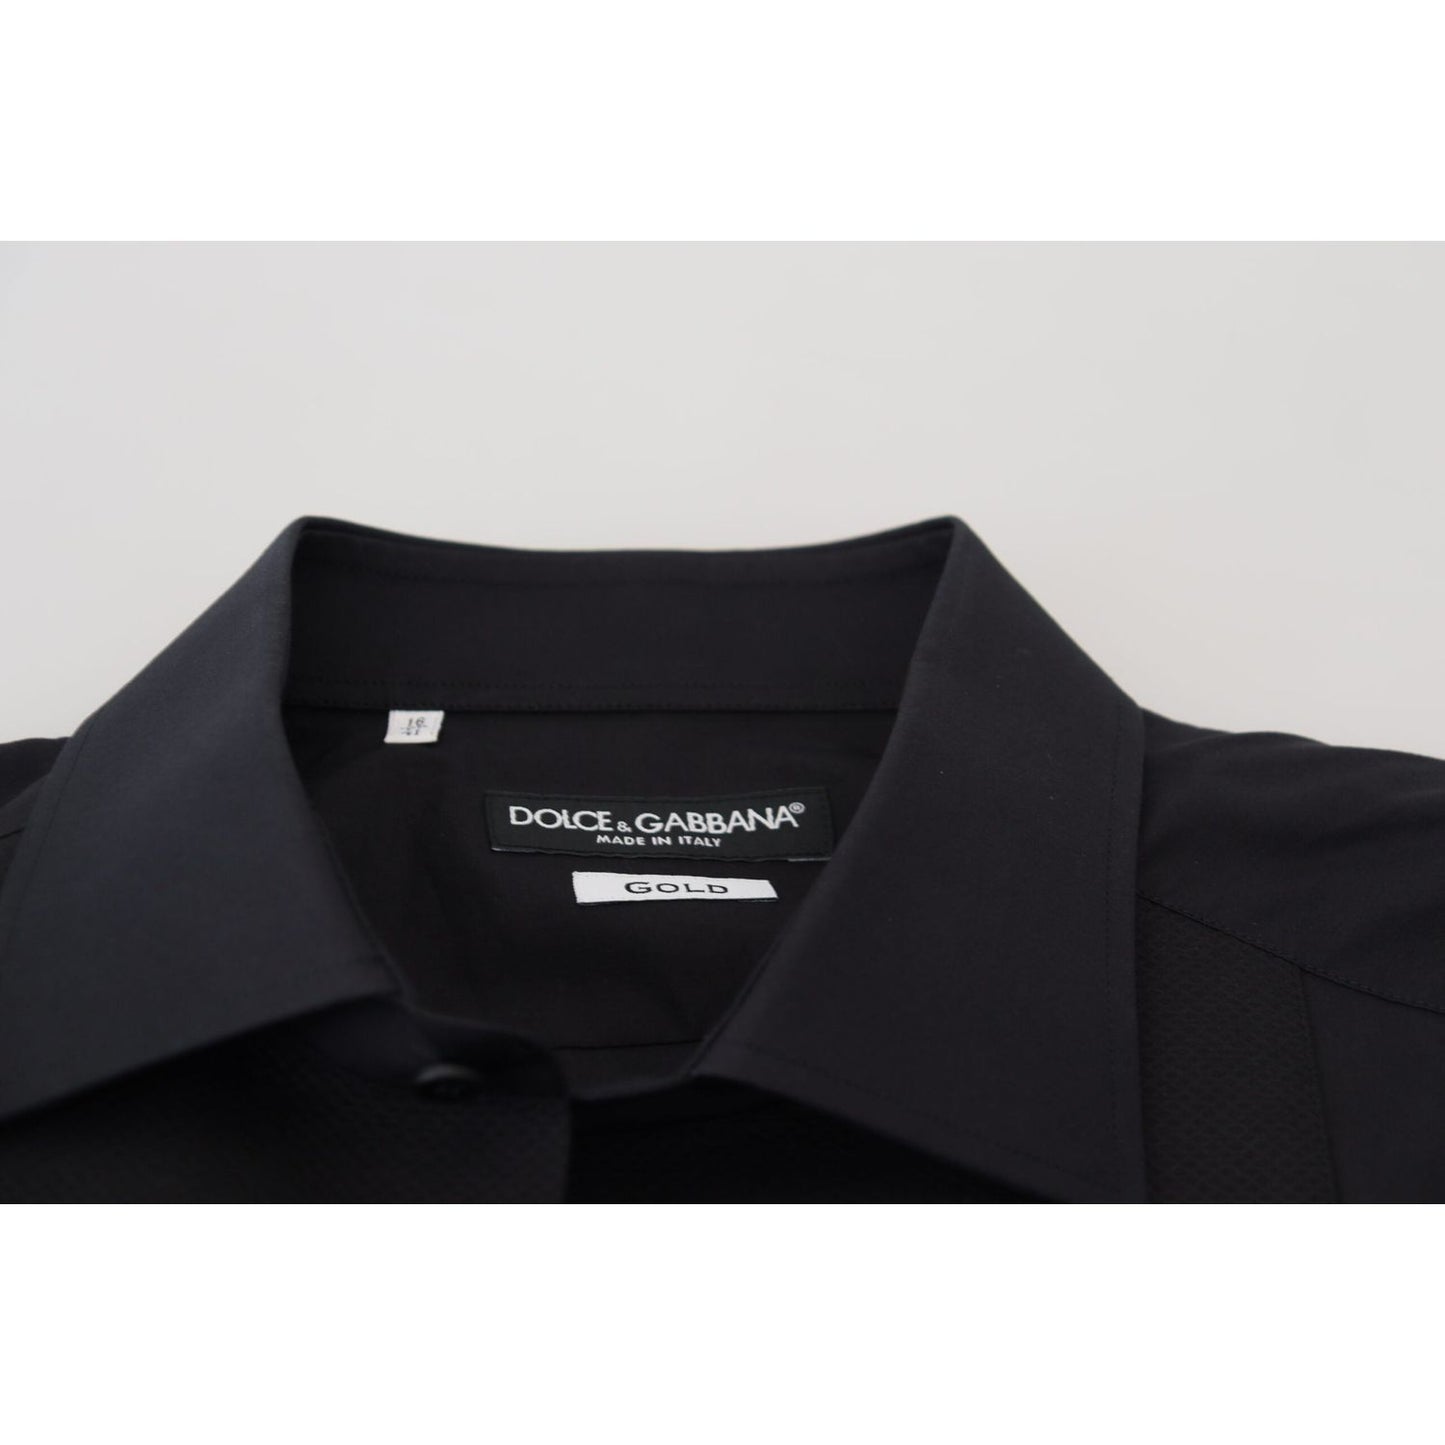 Dolce & Gabbana Elegant Black Formal Long Sleeve Shirt black-gold-cotton-collared-long-sleeve-shirt IMG_4492-scaled-b97fd1d1-df4.jpg